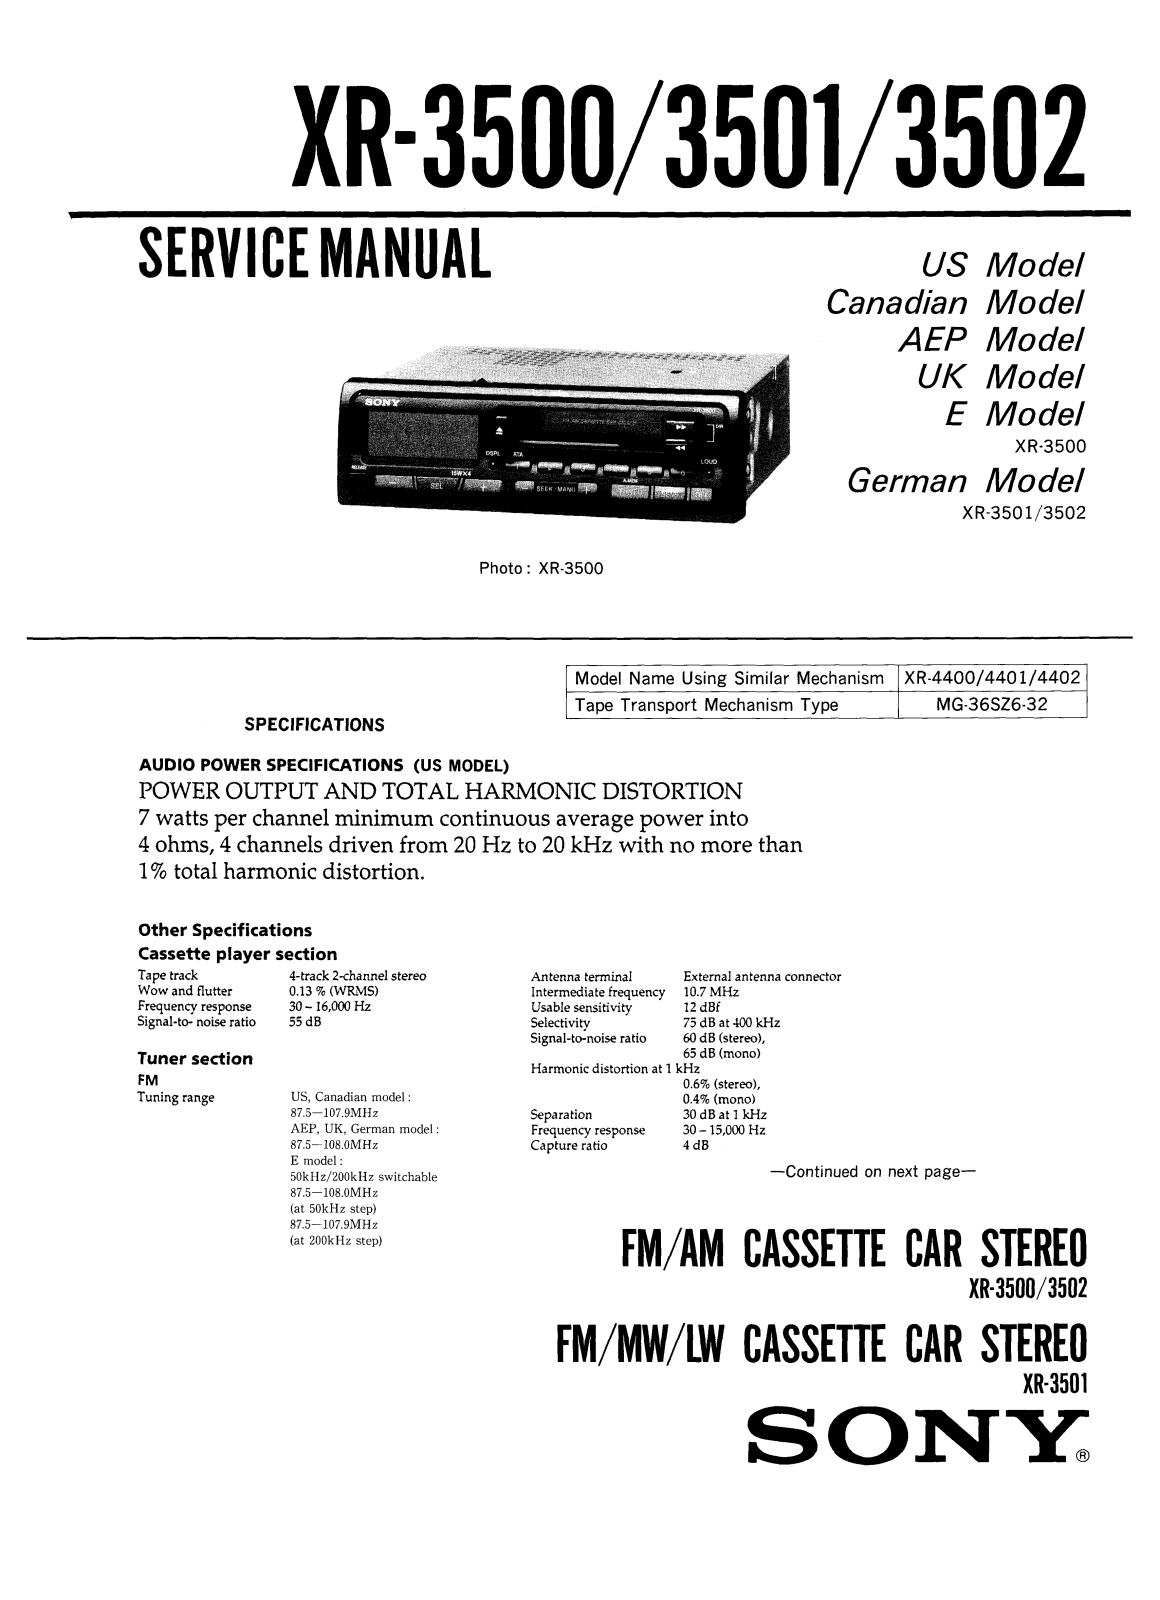 Sony XR-3500, XR-3501, XR-3502 Service Manual